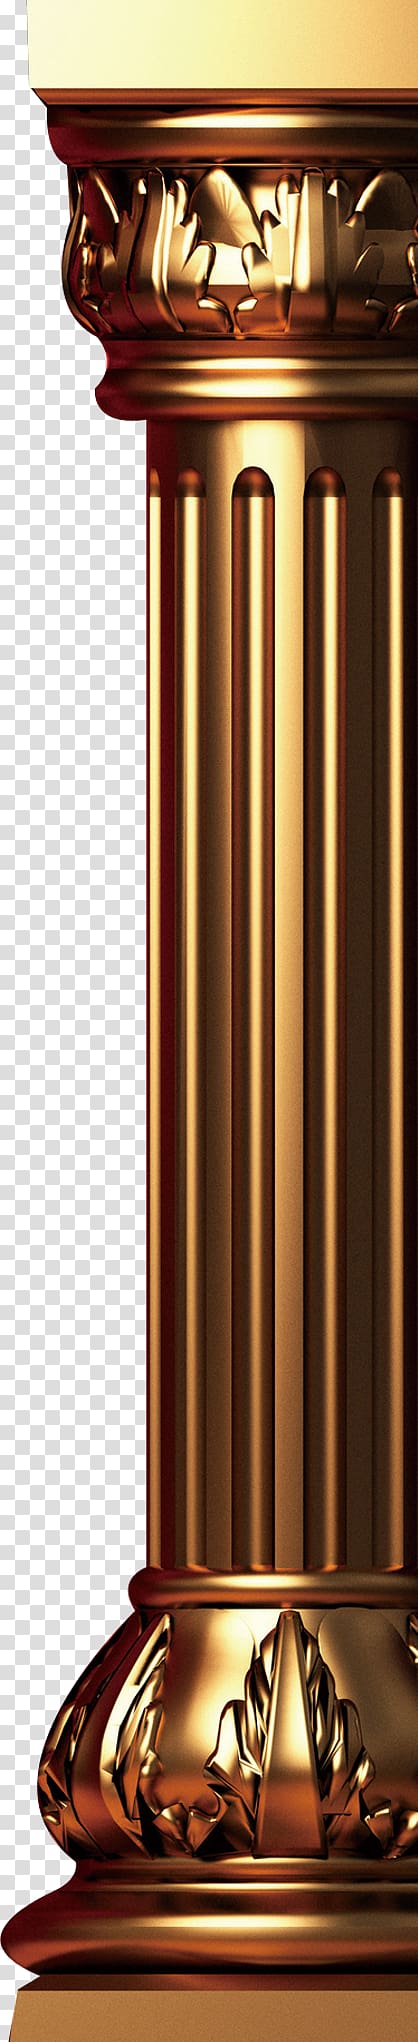 brass pillar, Column Metal, Gold metallic material column transparent background PNG clipart